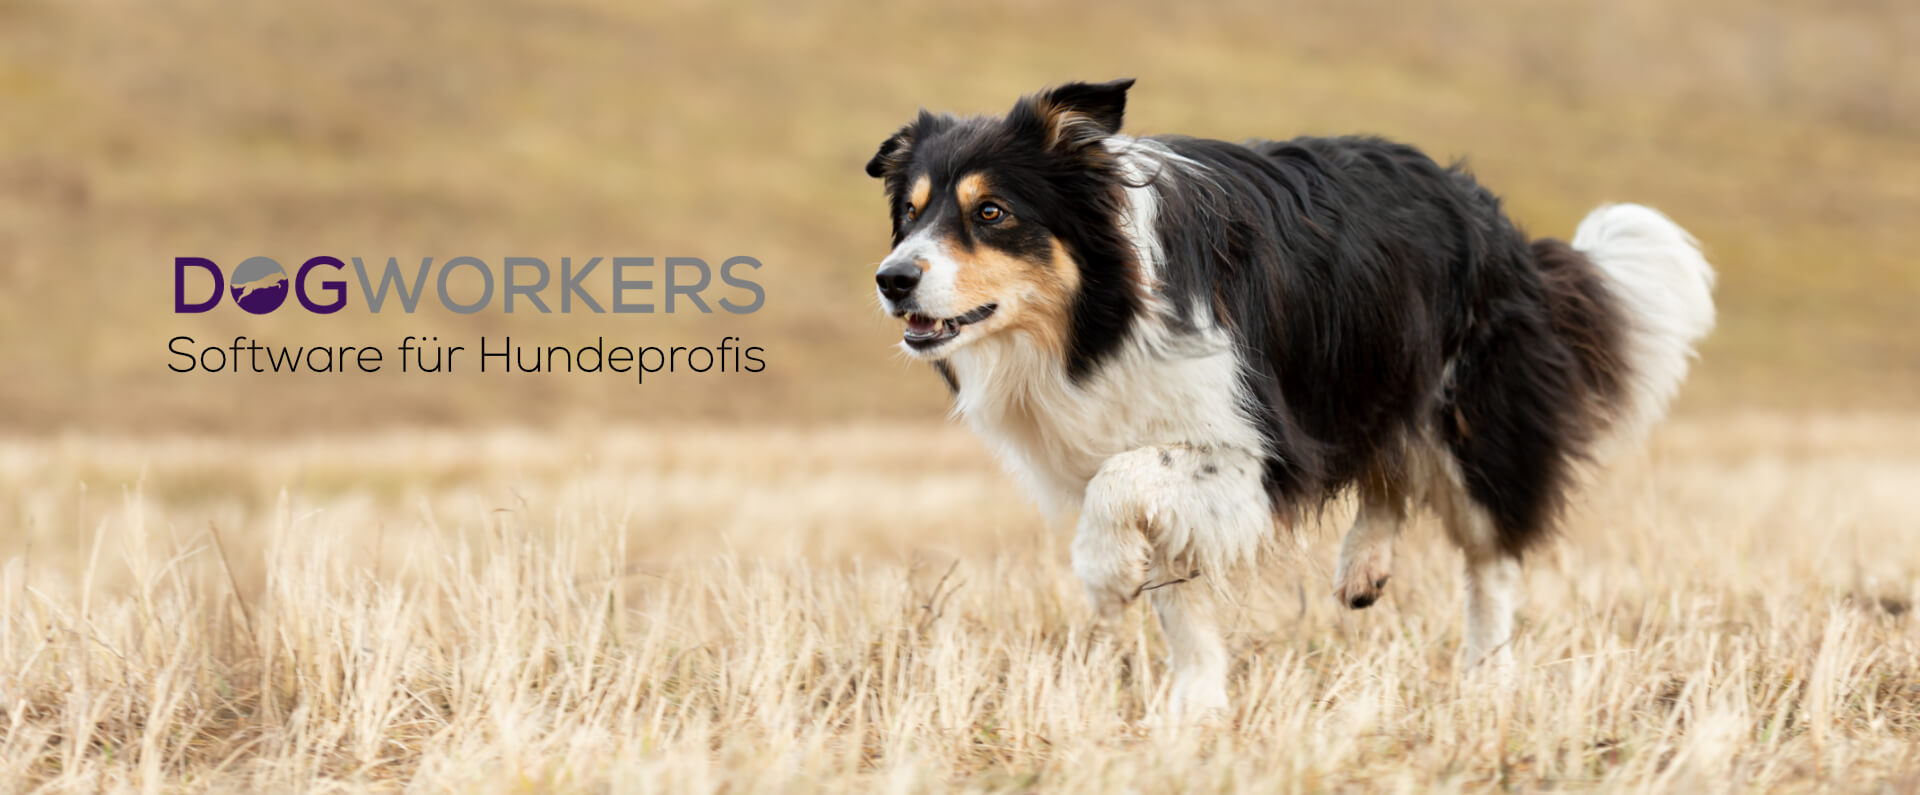 DogWorkers - Software für Hundeprofis